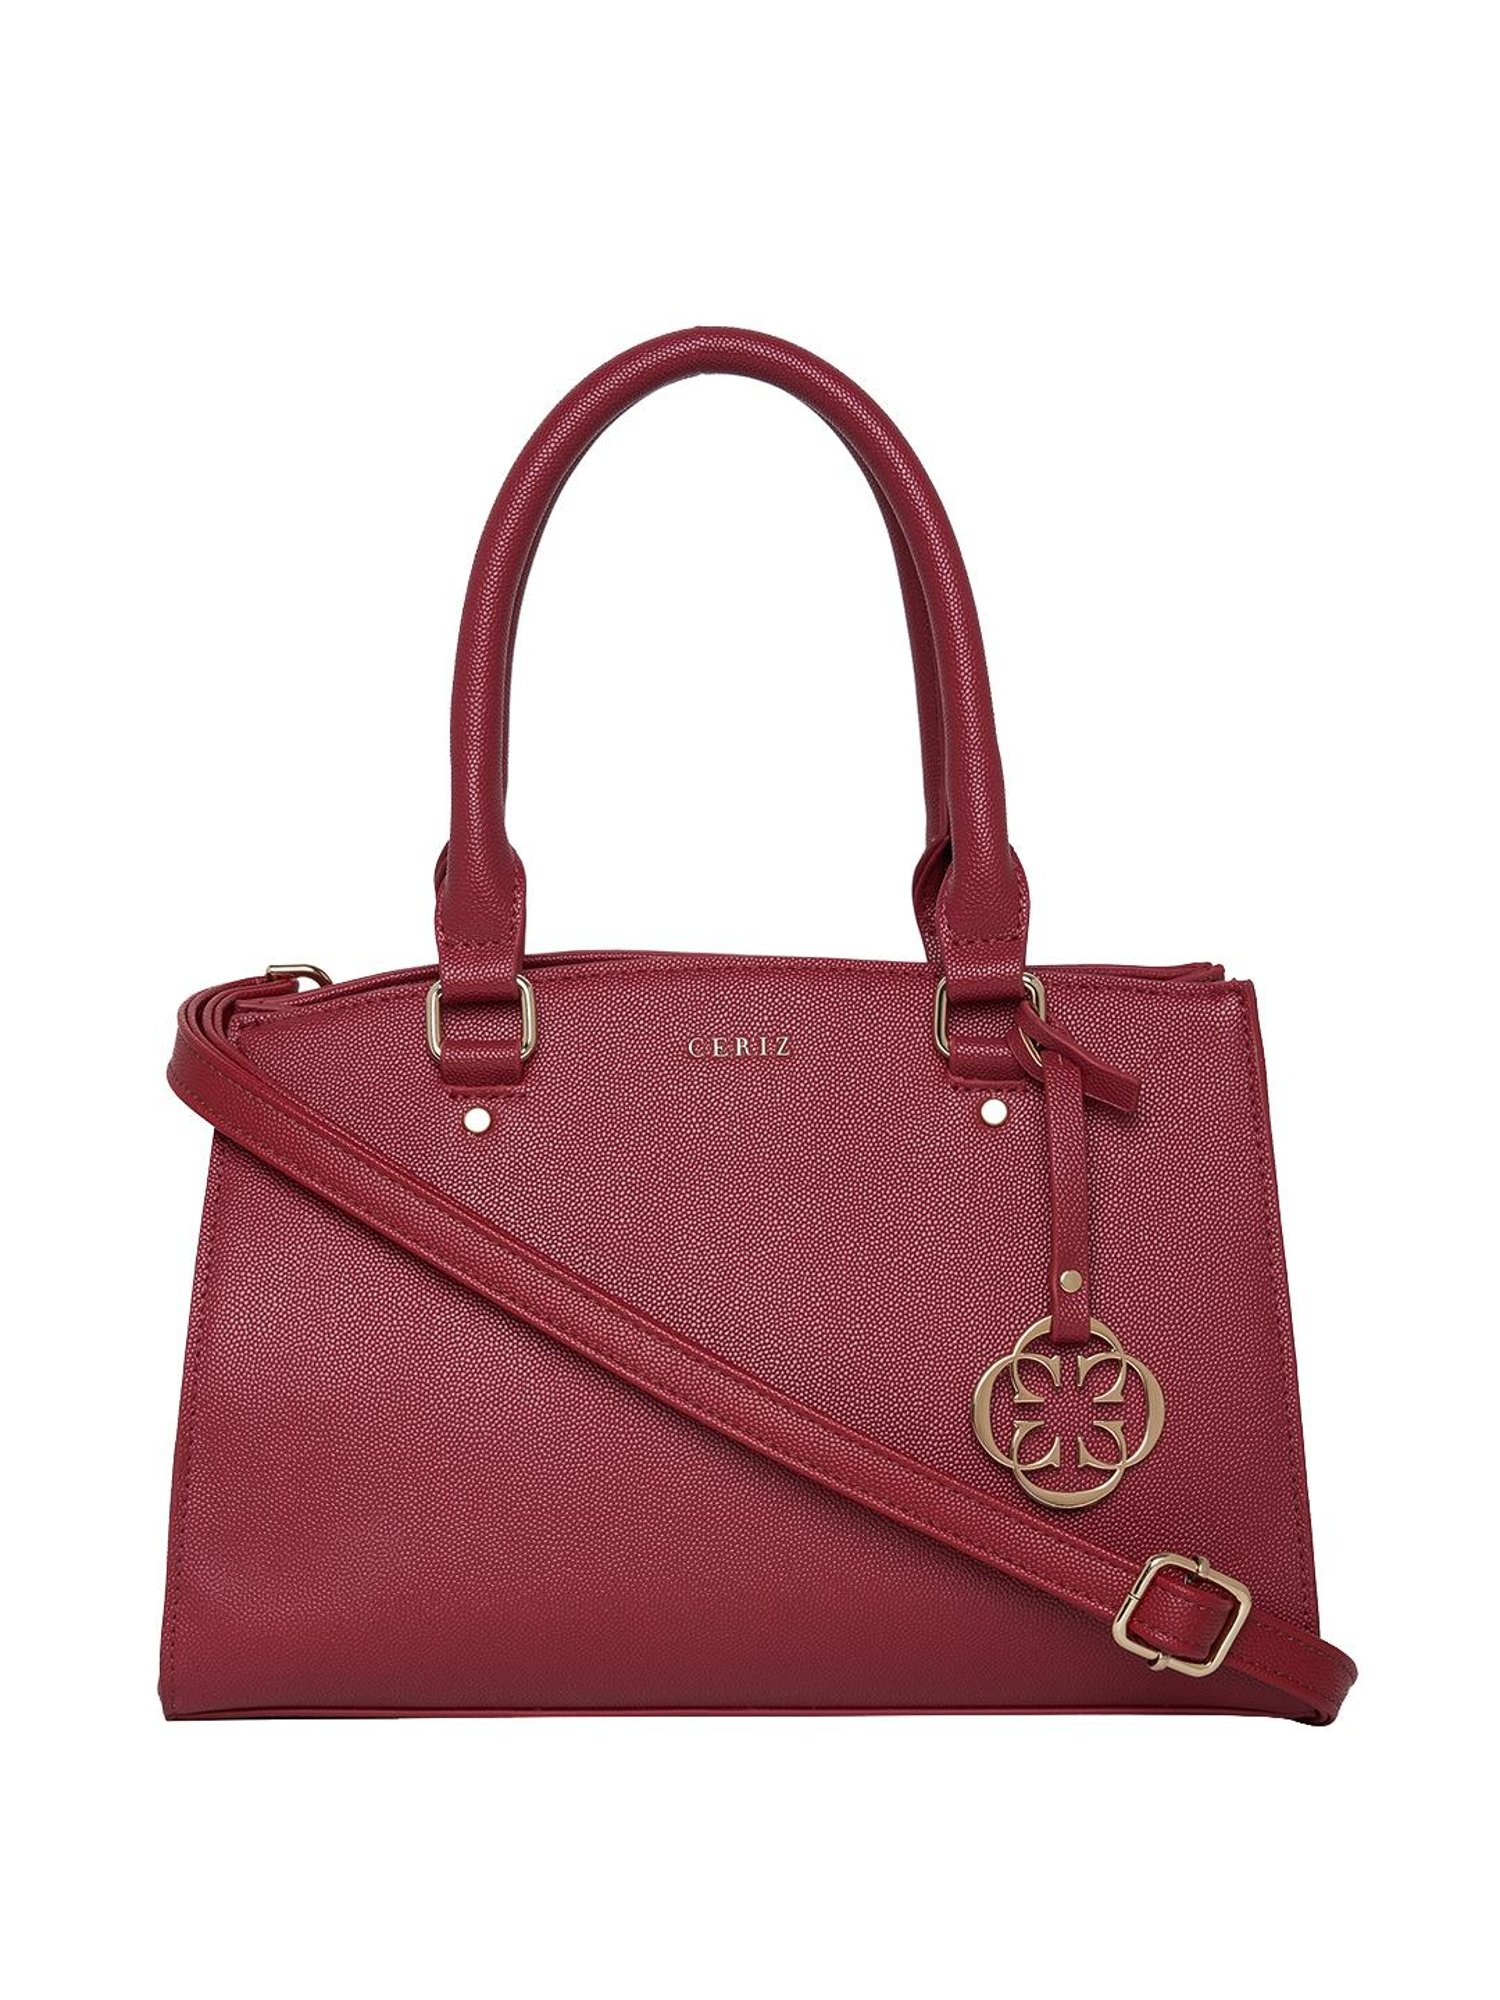 Ceriz | Bags | Big Tote Bag Brown Colour Ceriz Brand | Poshmark